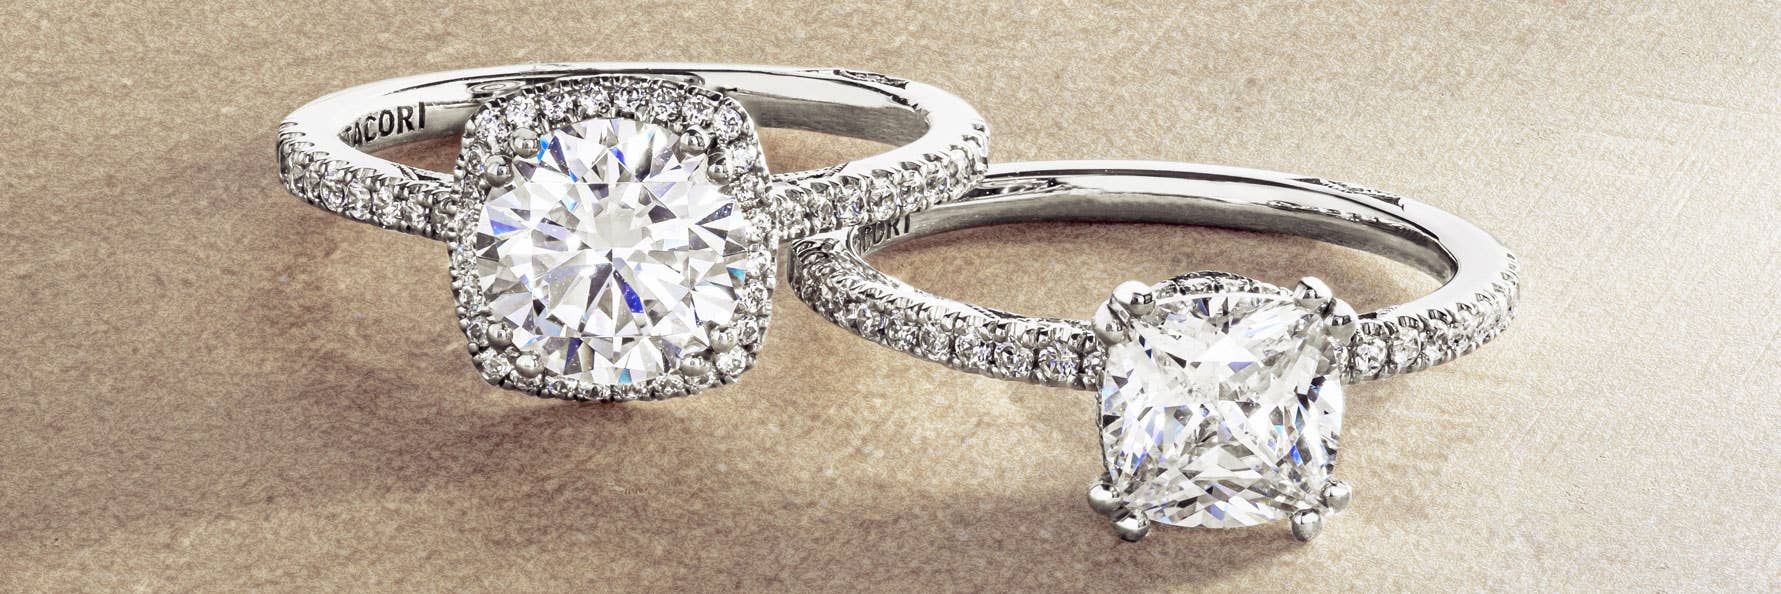 TACORI cushion cut diamond engagement rings